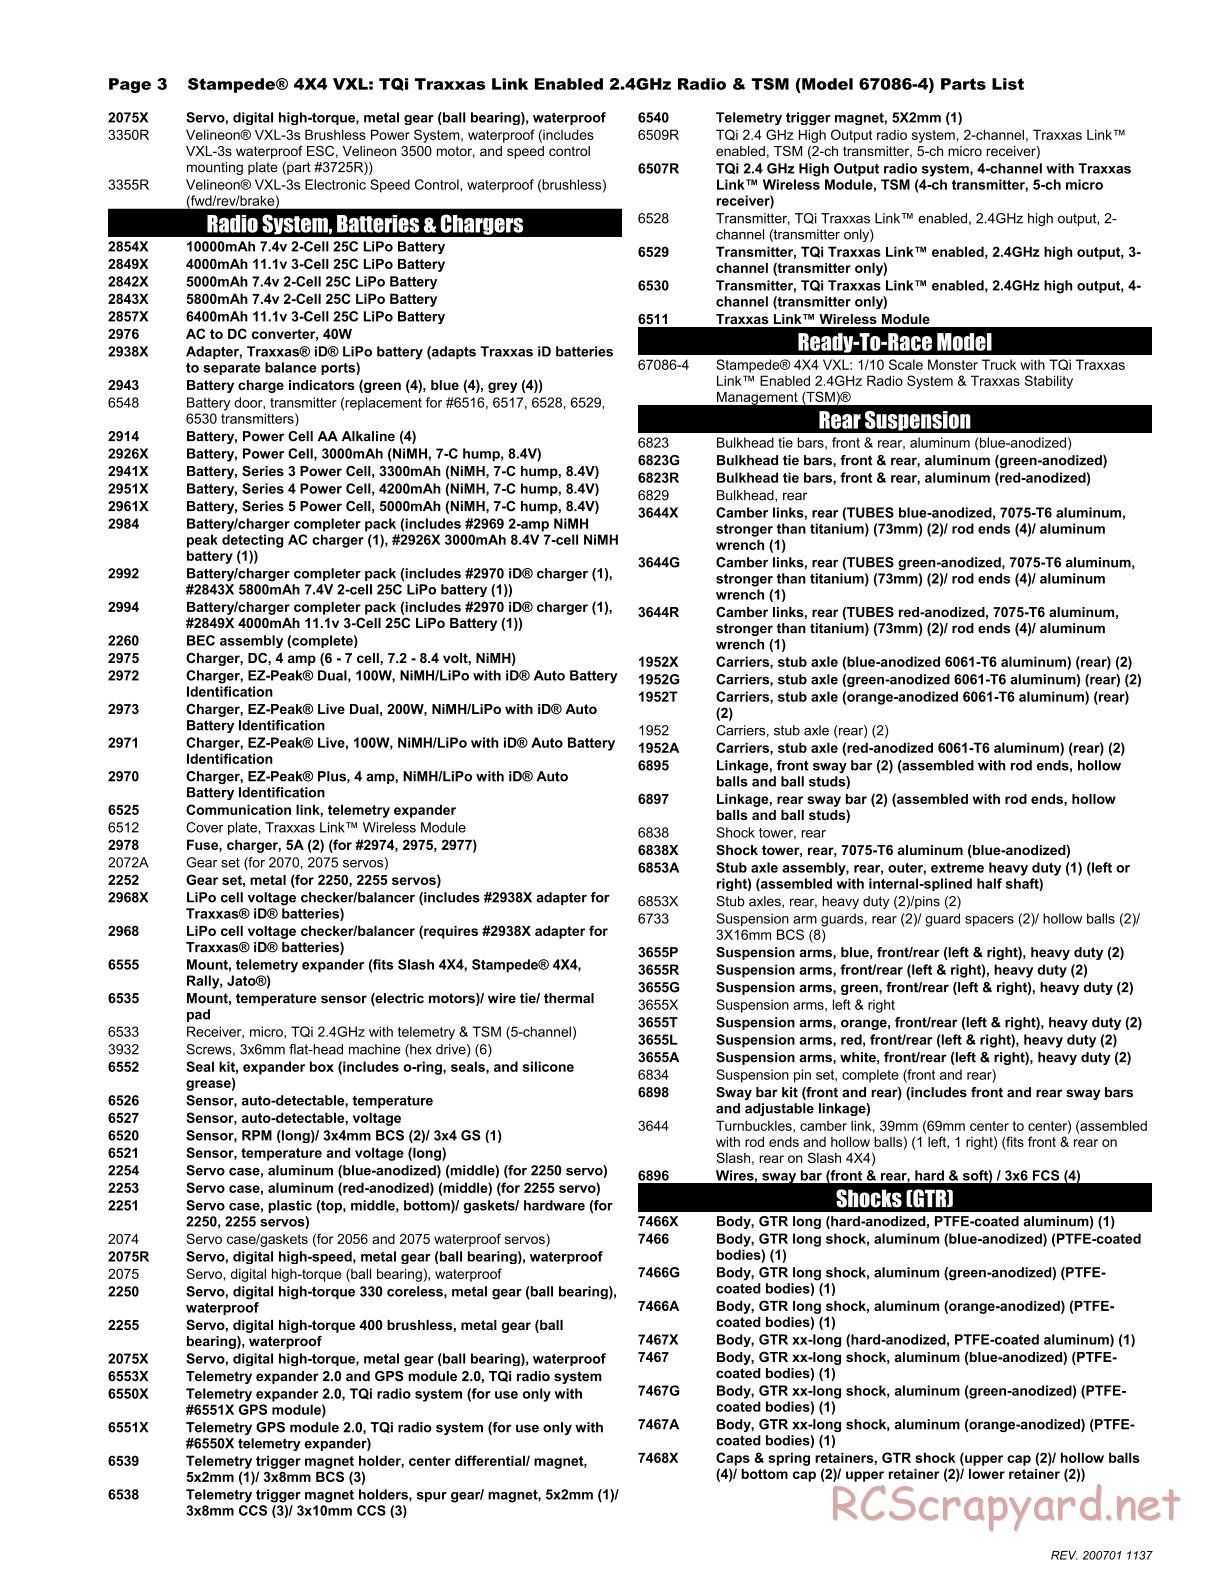 Traxxas - Stampede 4x4 VXL TSM - Parts List - Page 3